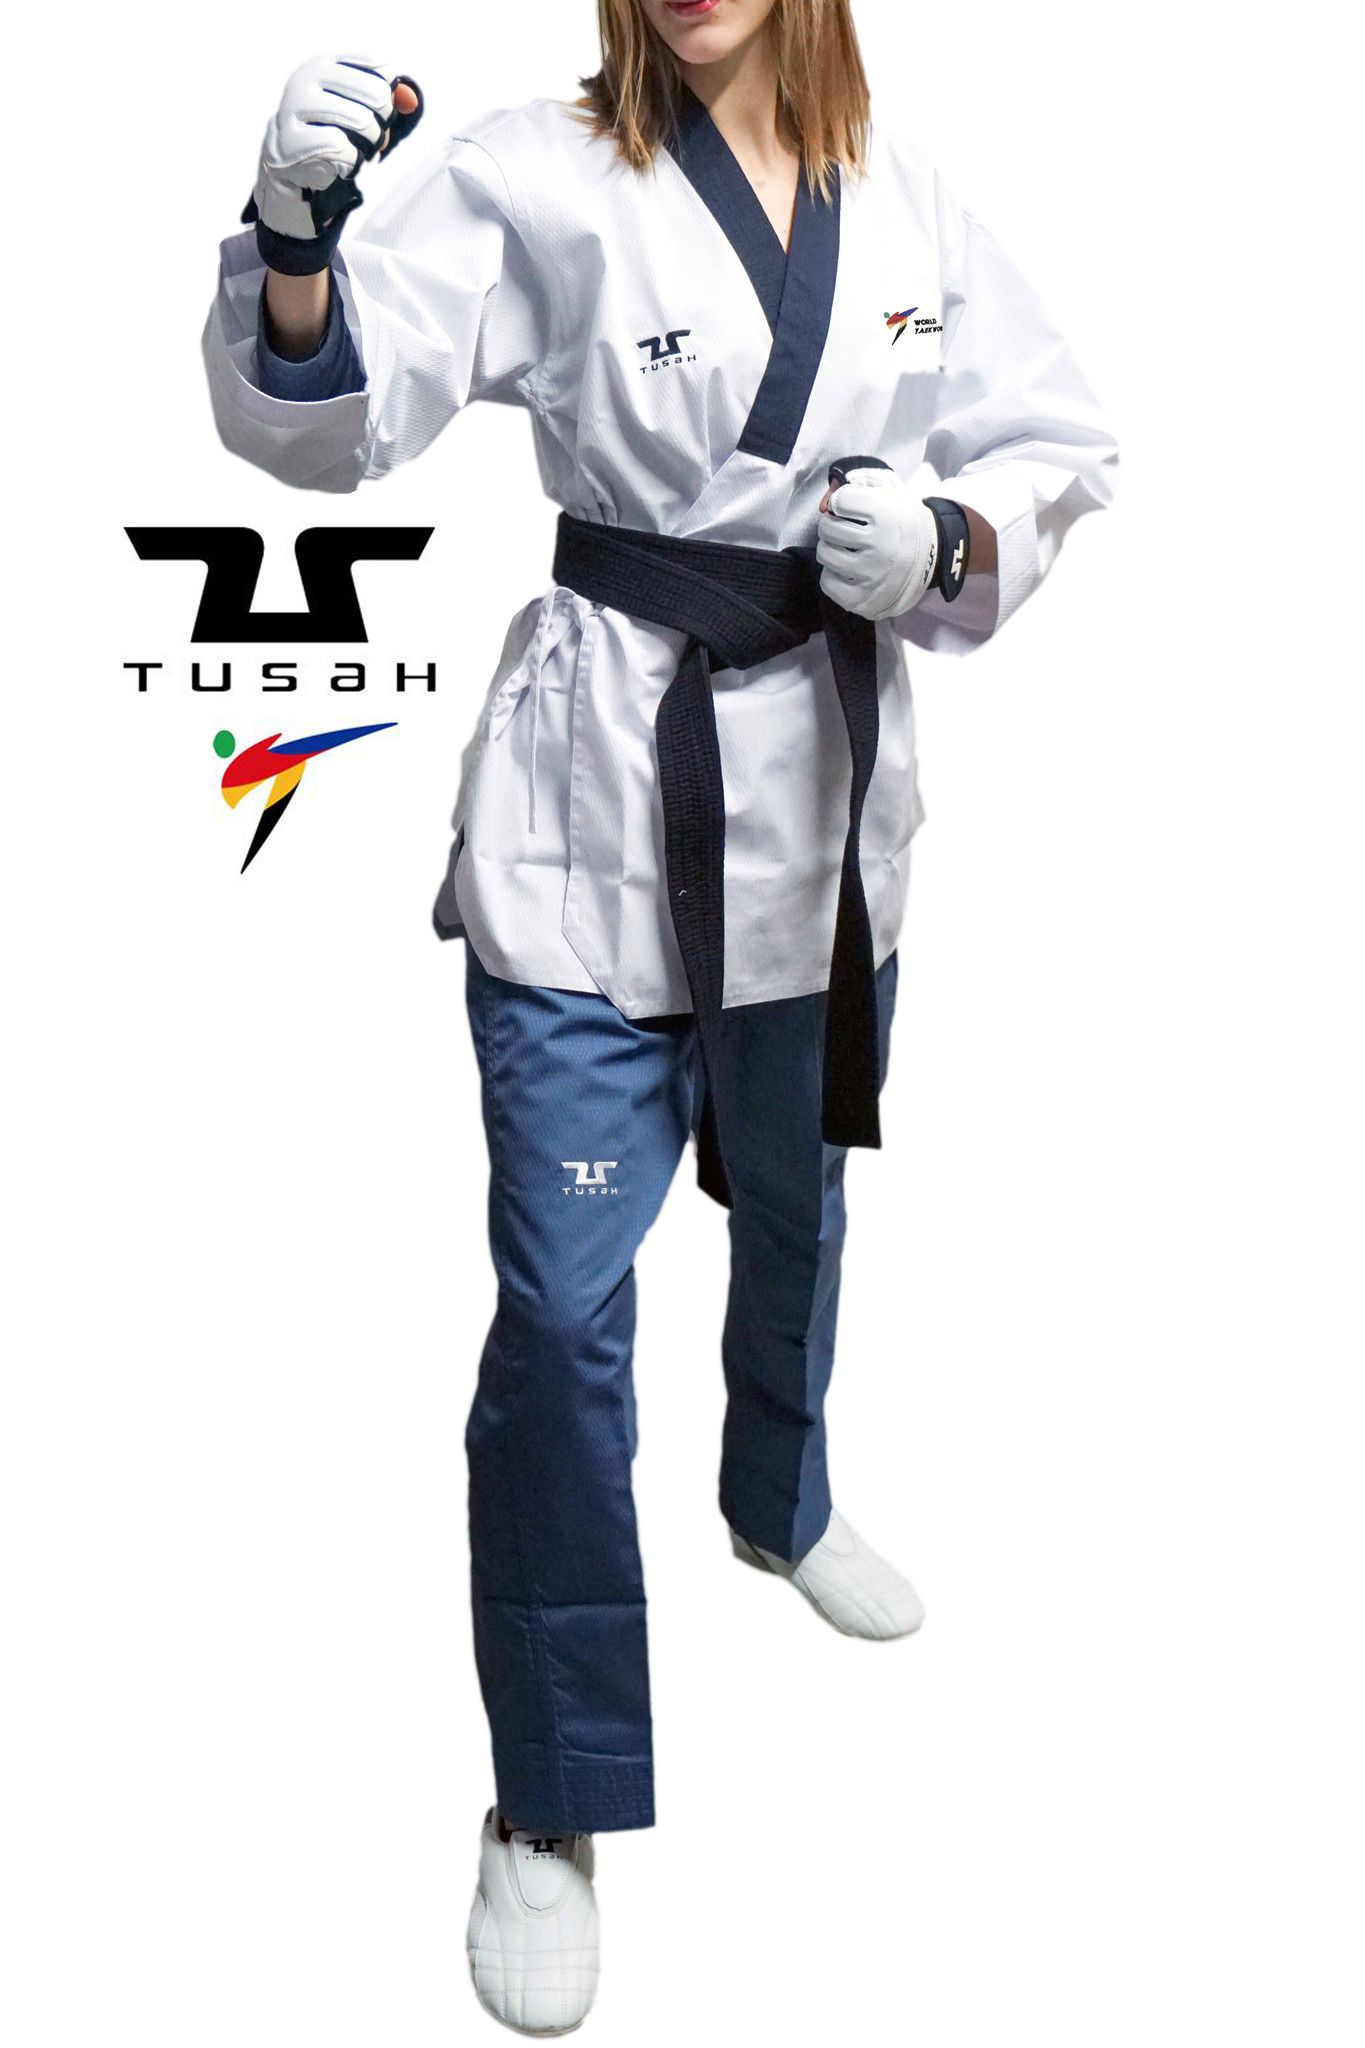 Poomsae Easyfit Dan Femminile Tusah per Taekwondo Omologato WT per forme e competizioni